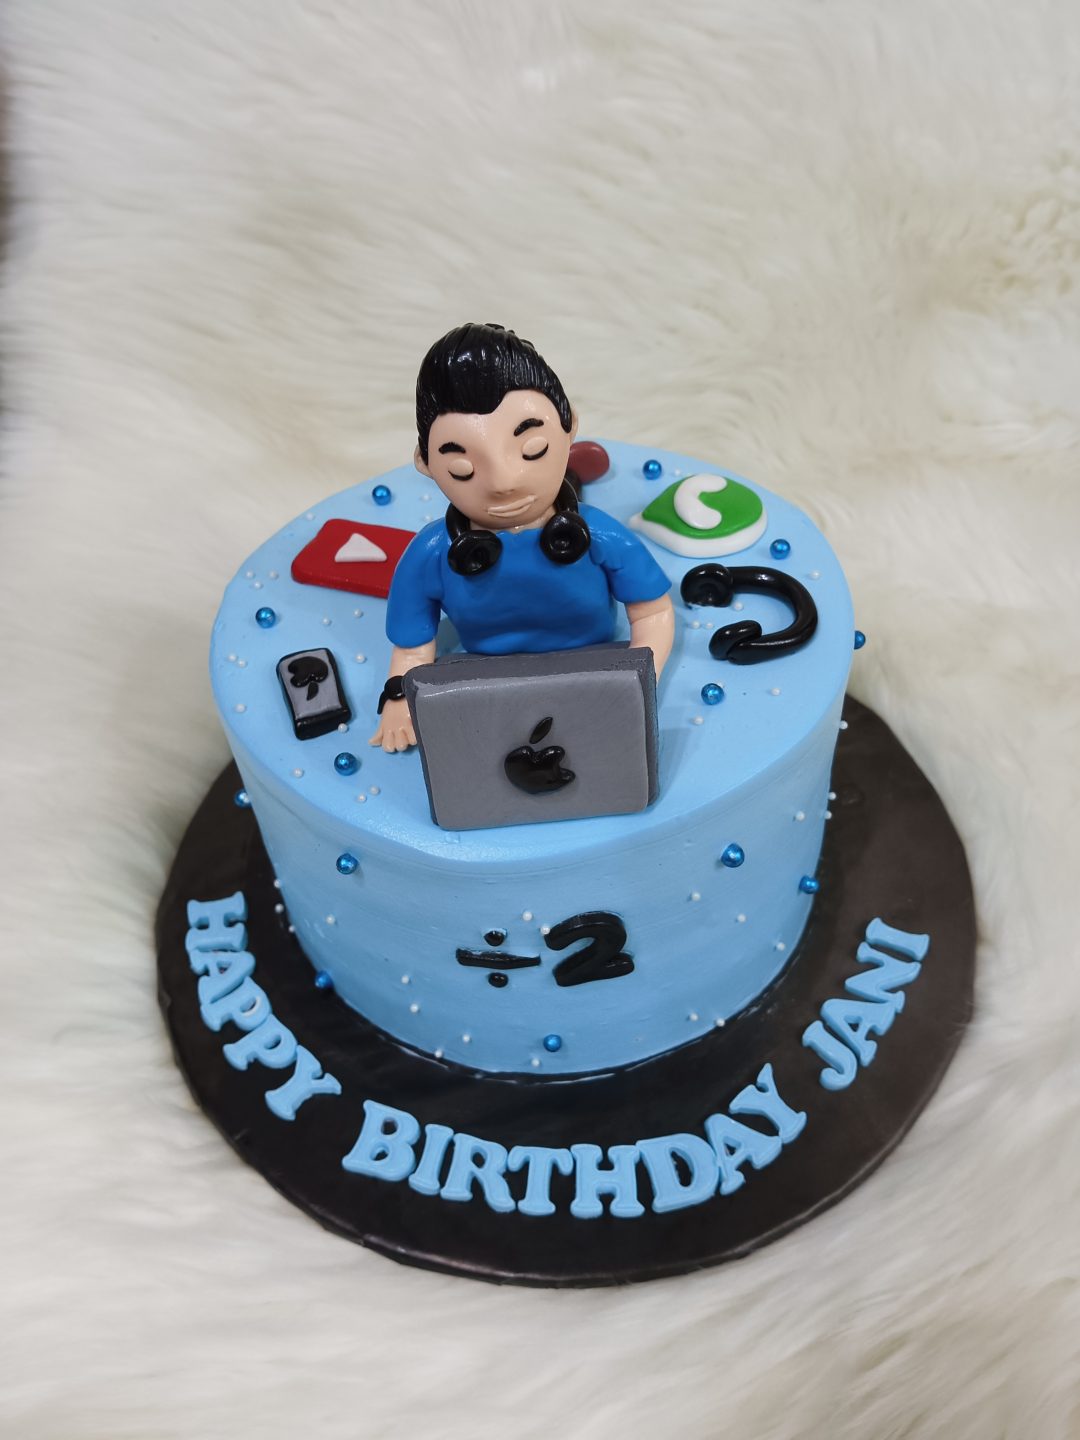 Software Engineer theme cream with fondant cake